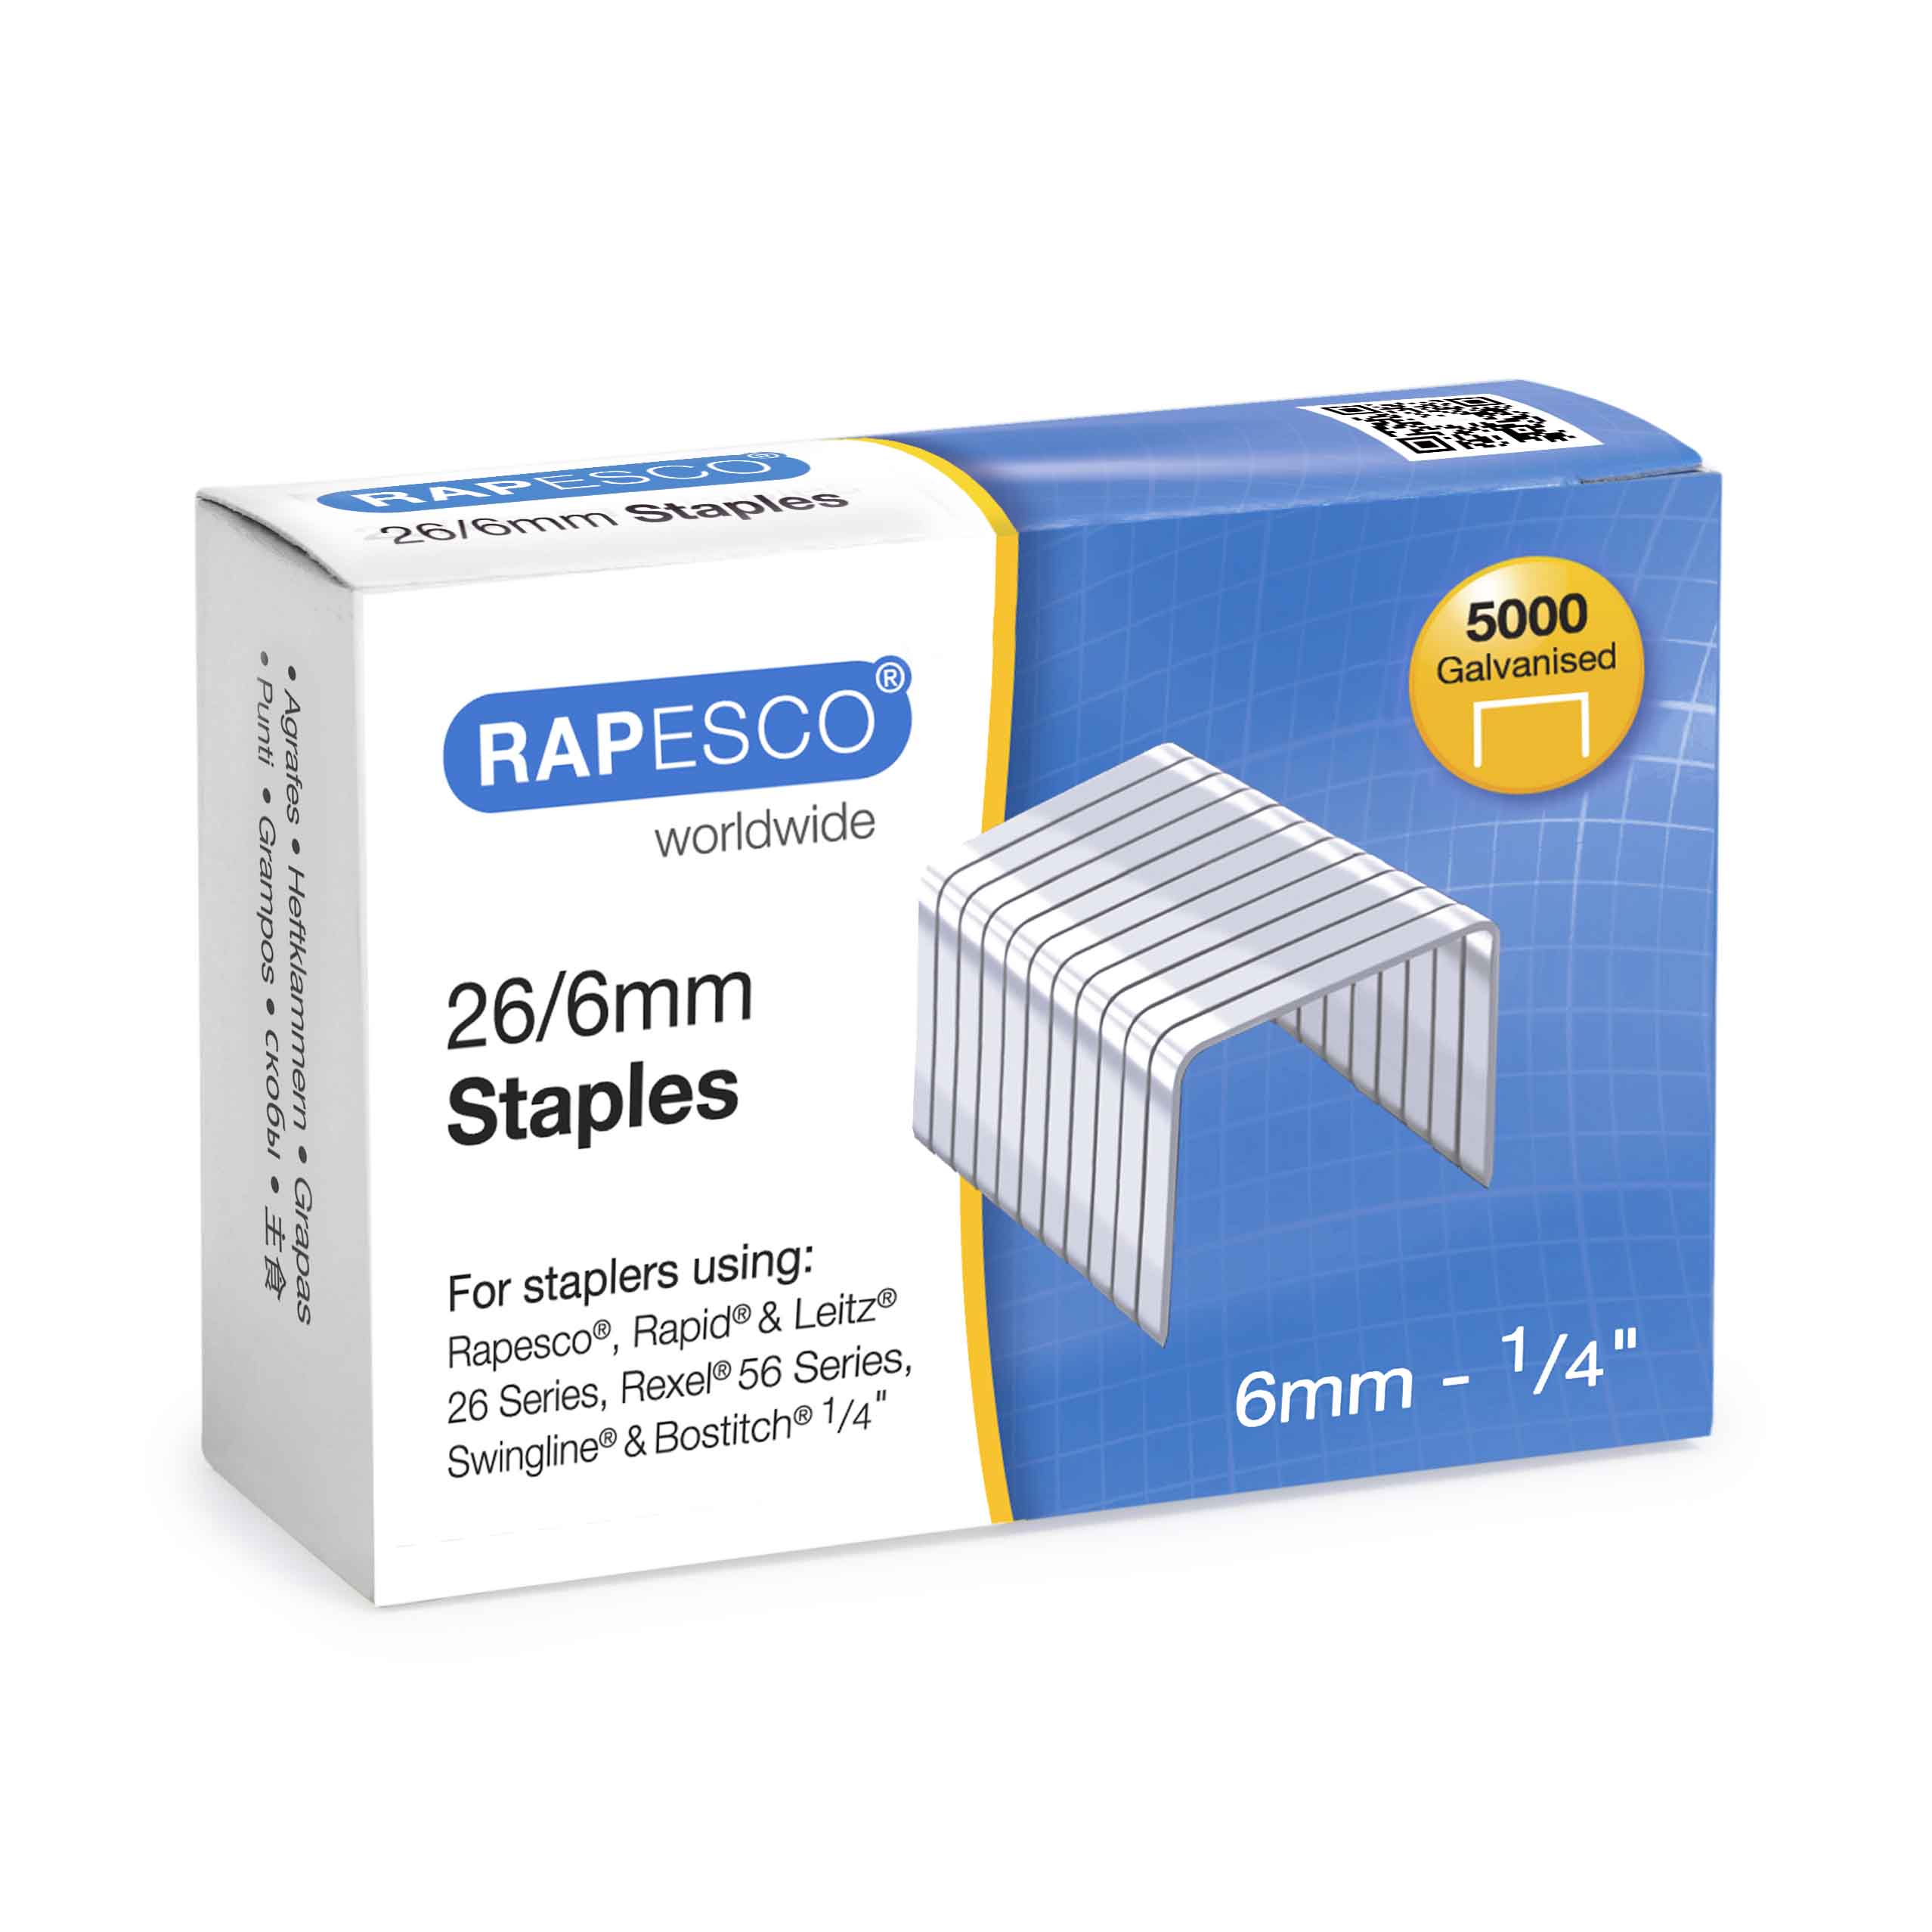 26/6mm Galvanised Staples - Pack of 5000 - Rapesco Worldwide